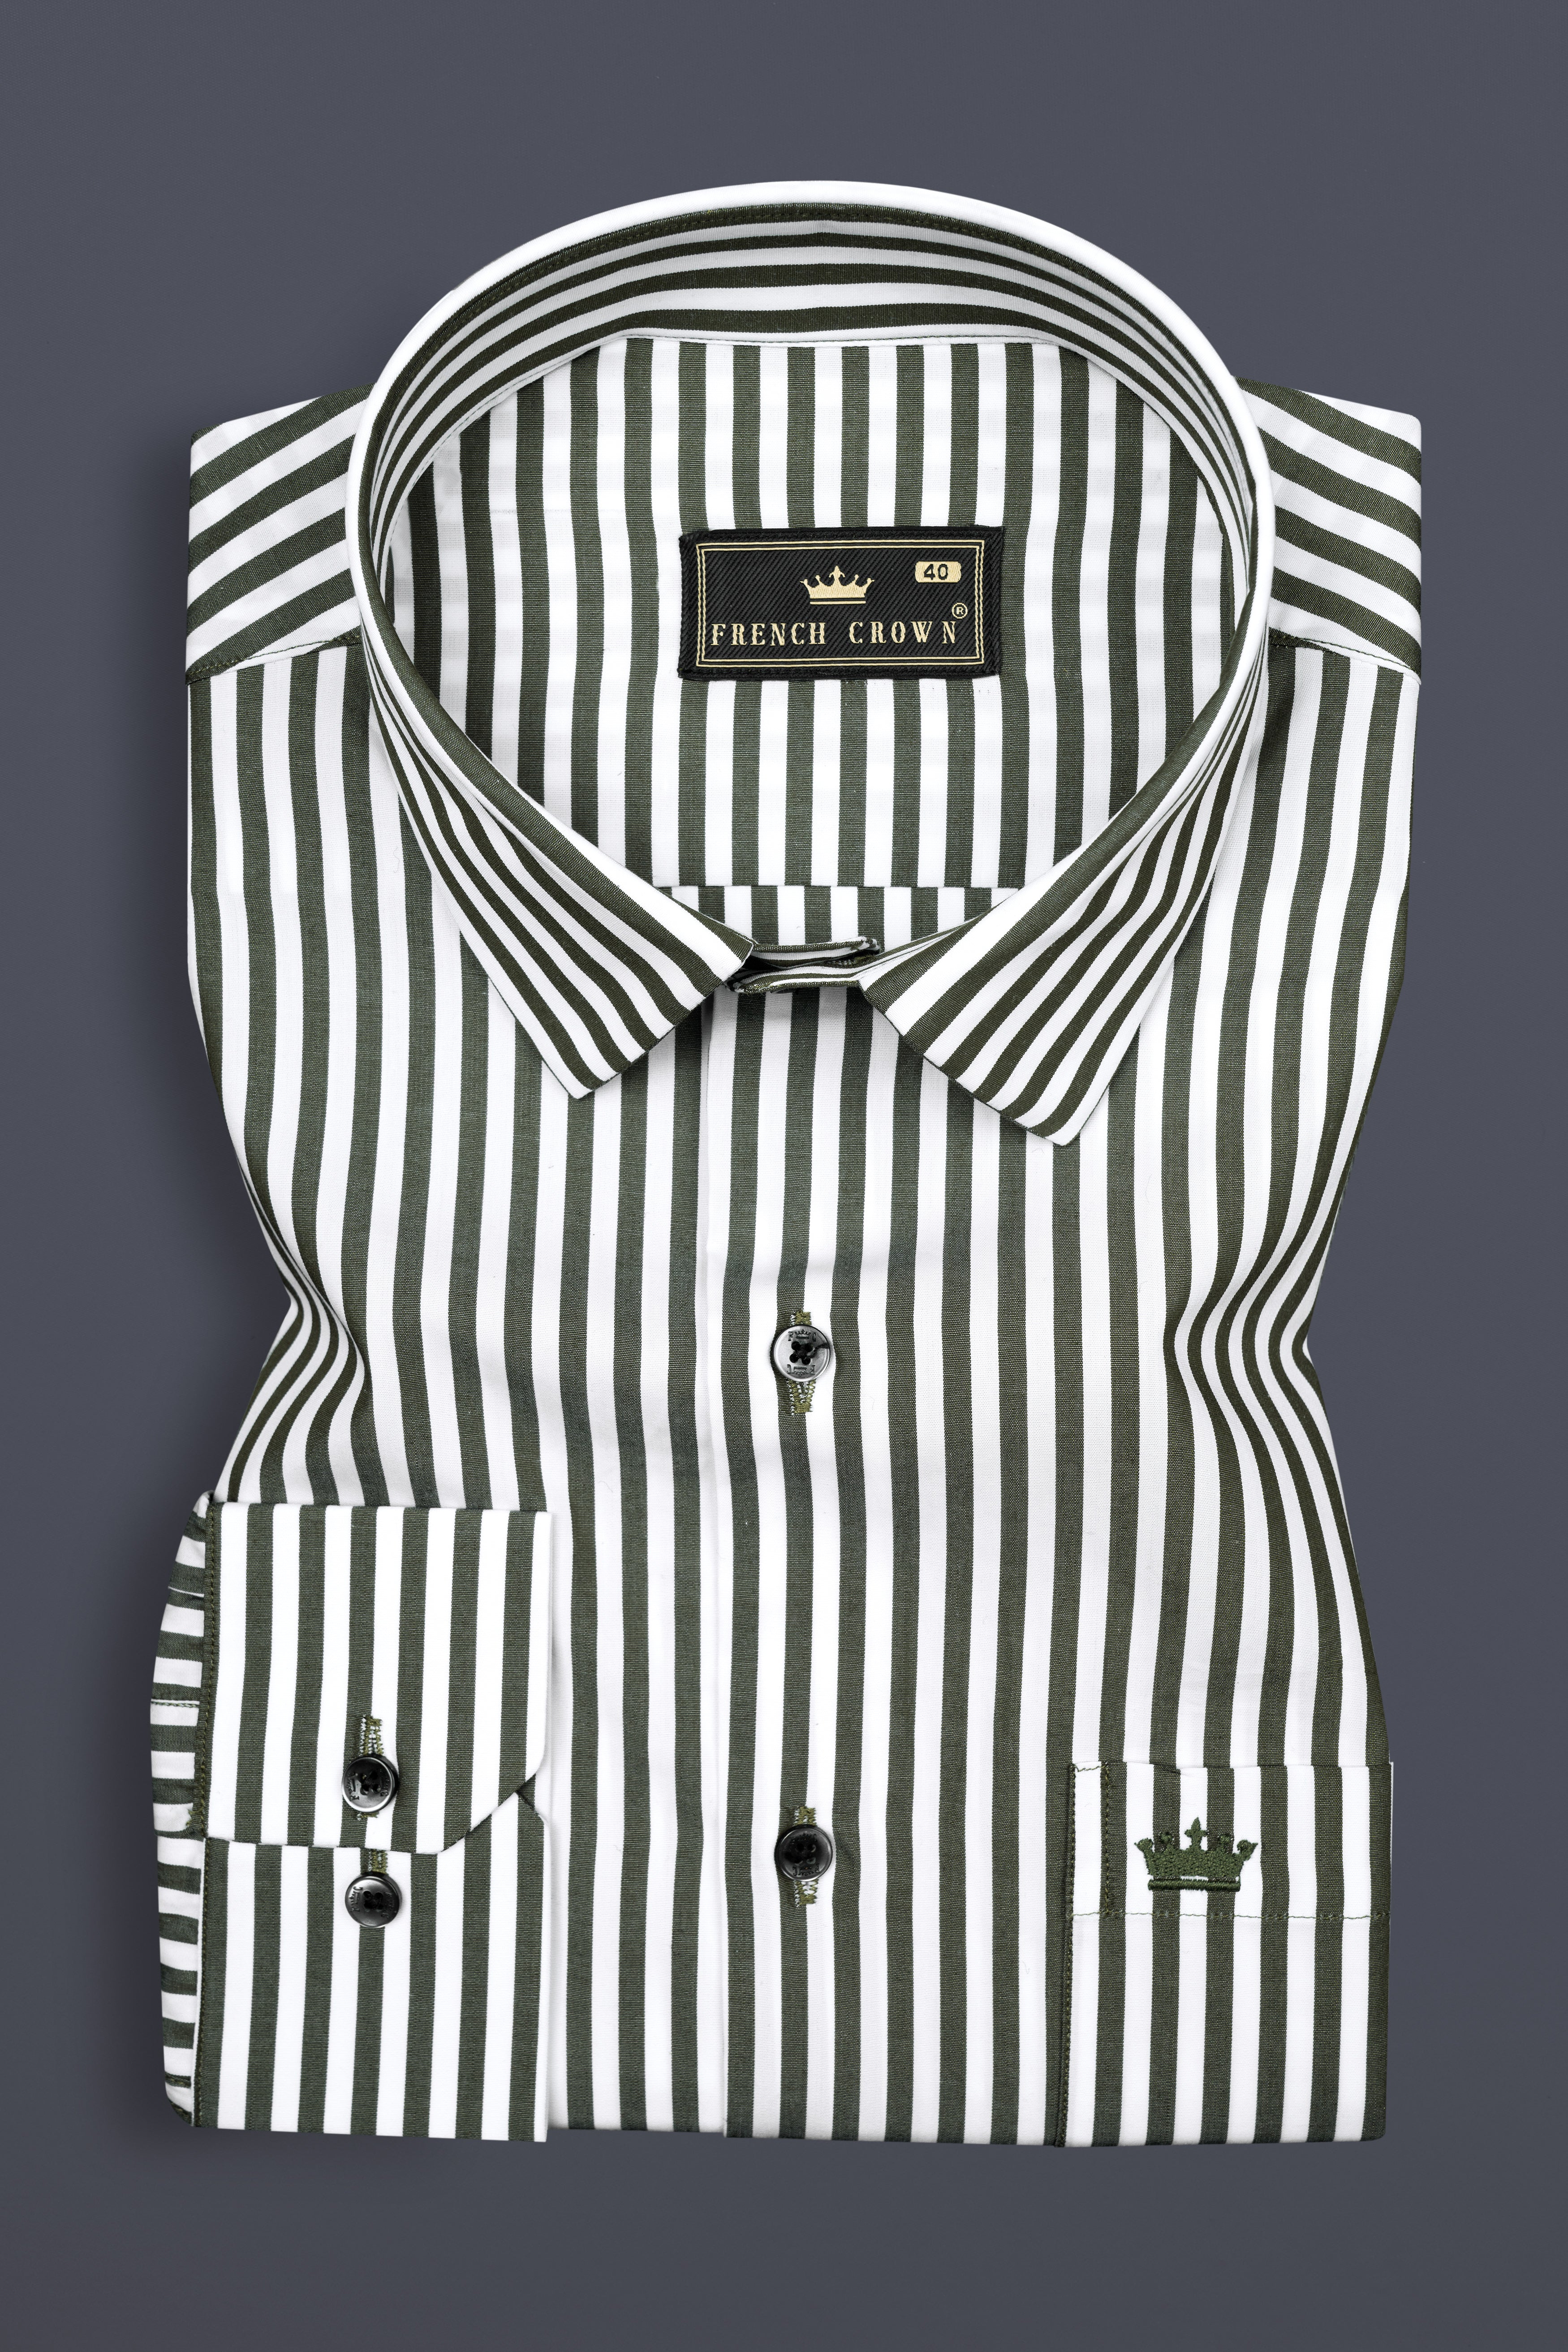 Zeus Green and Bright White Striped Super Soft Premium Cotton Shirt